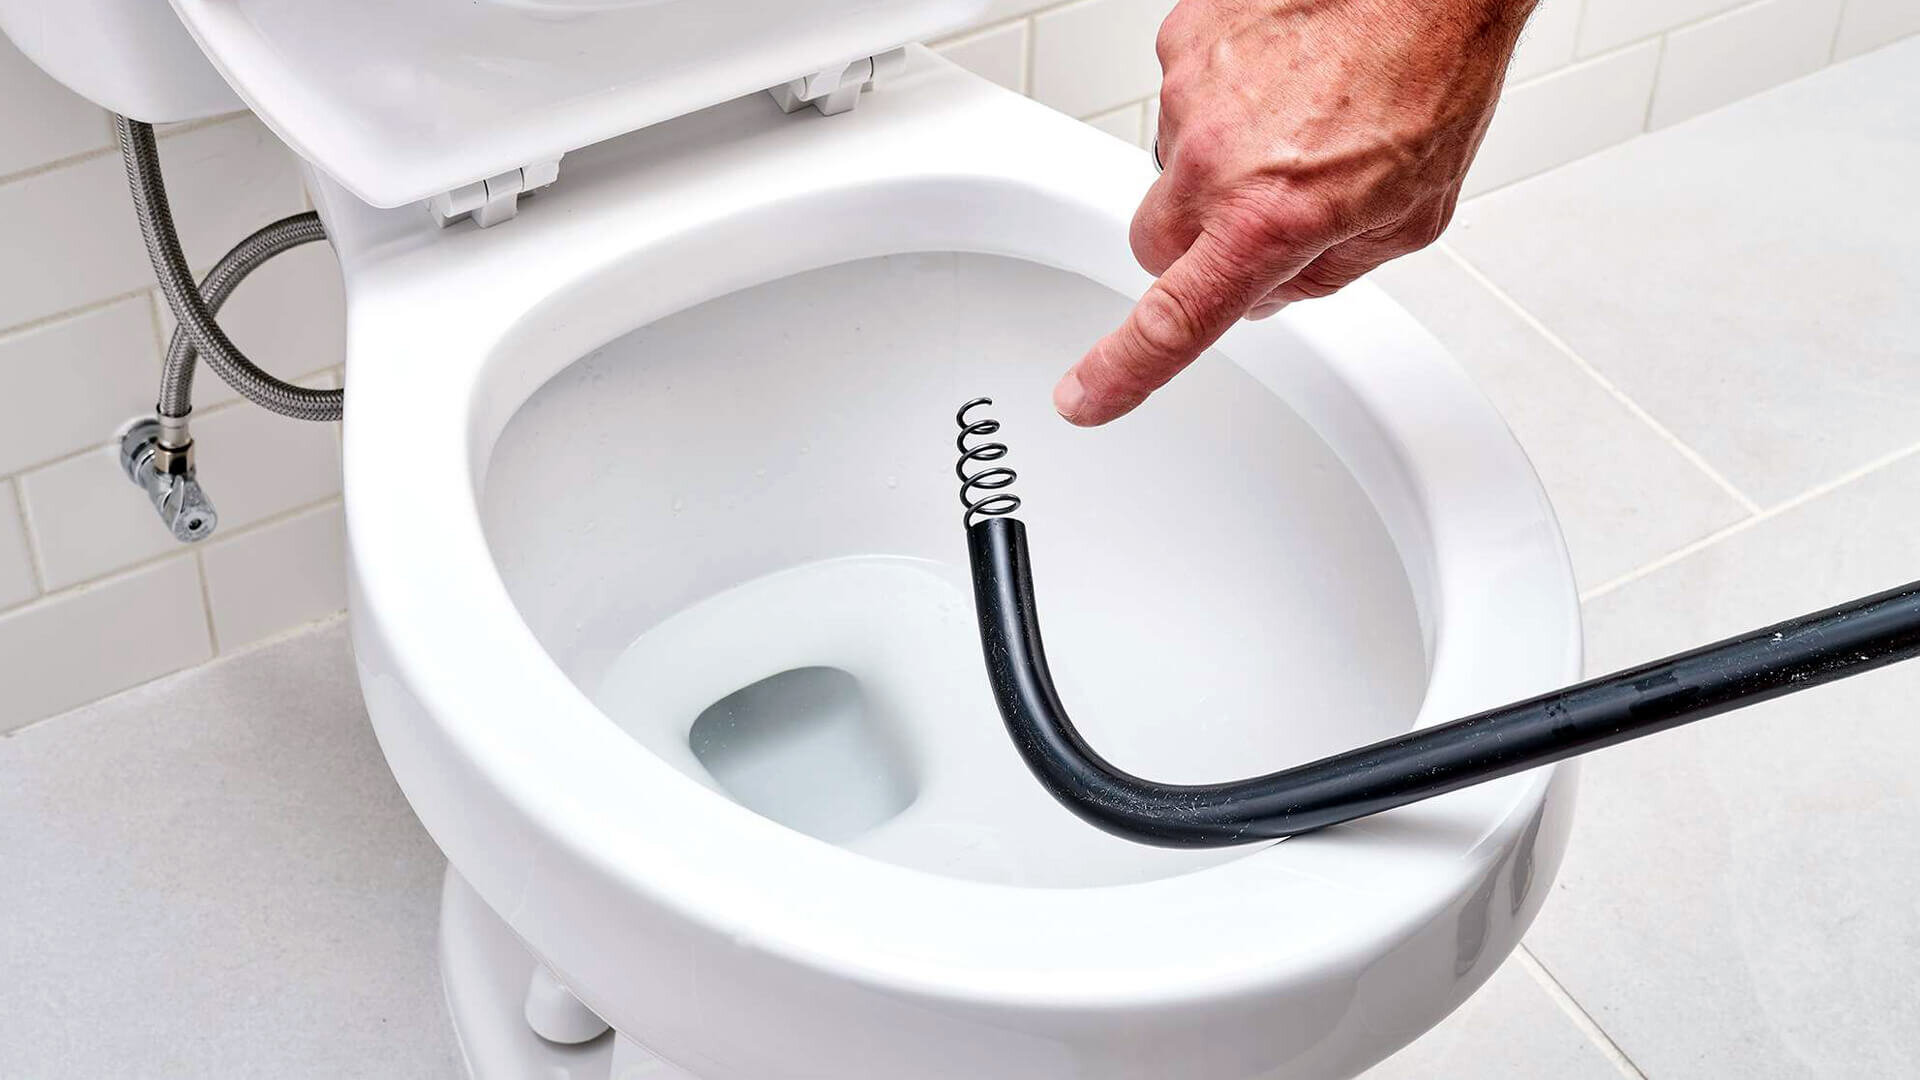 https://zeve.au/bigblue/uploads/2022/09/remove-items-from-toilet-trap.jpg